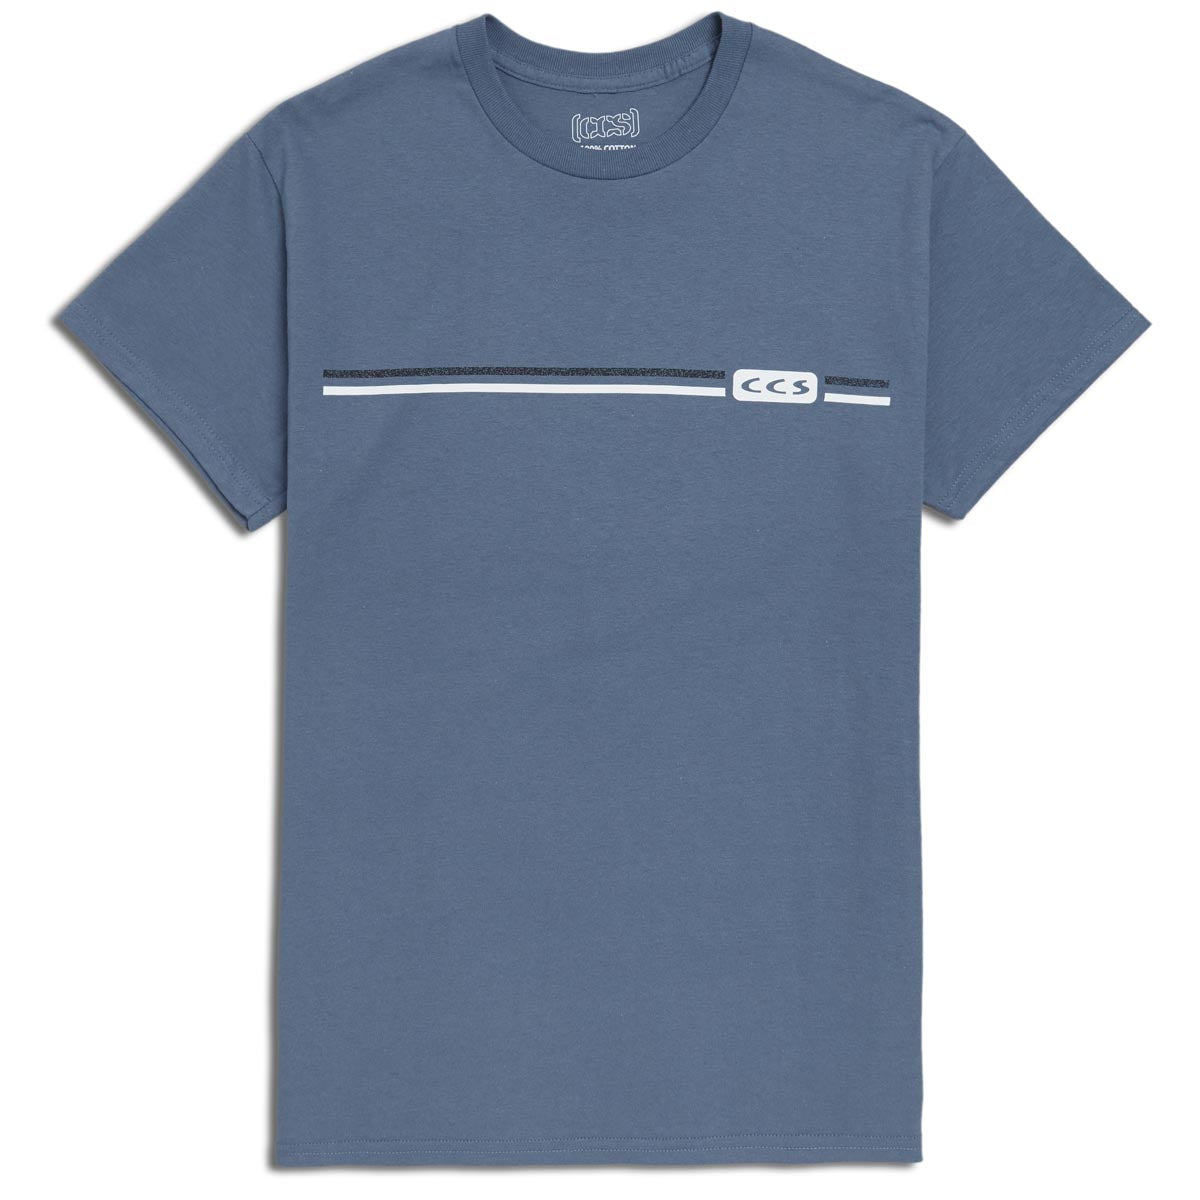 CCS Noise T-Shirt - Slate Blue image 2